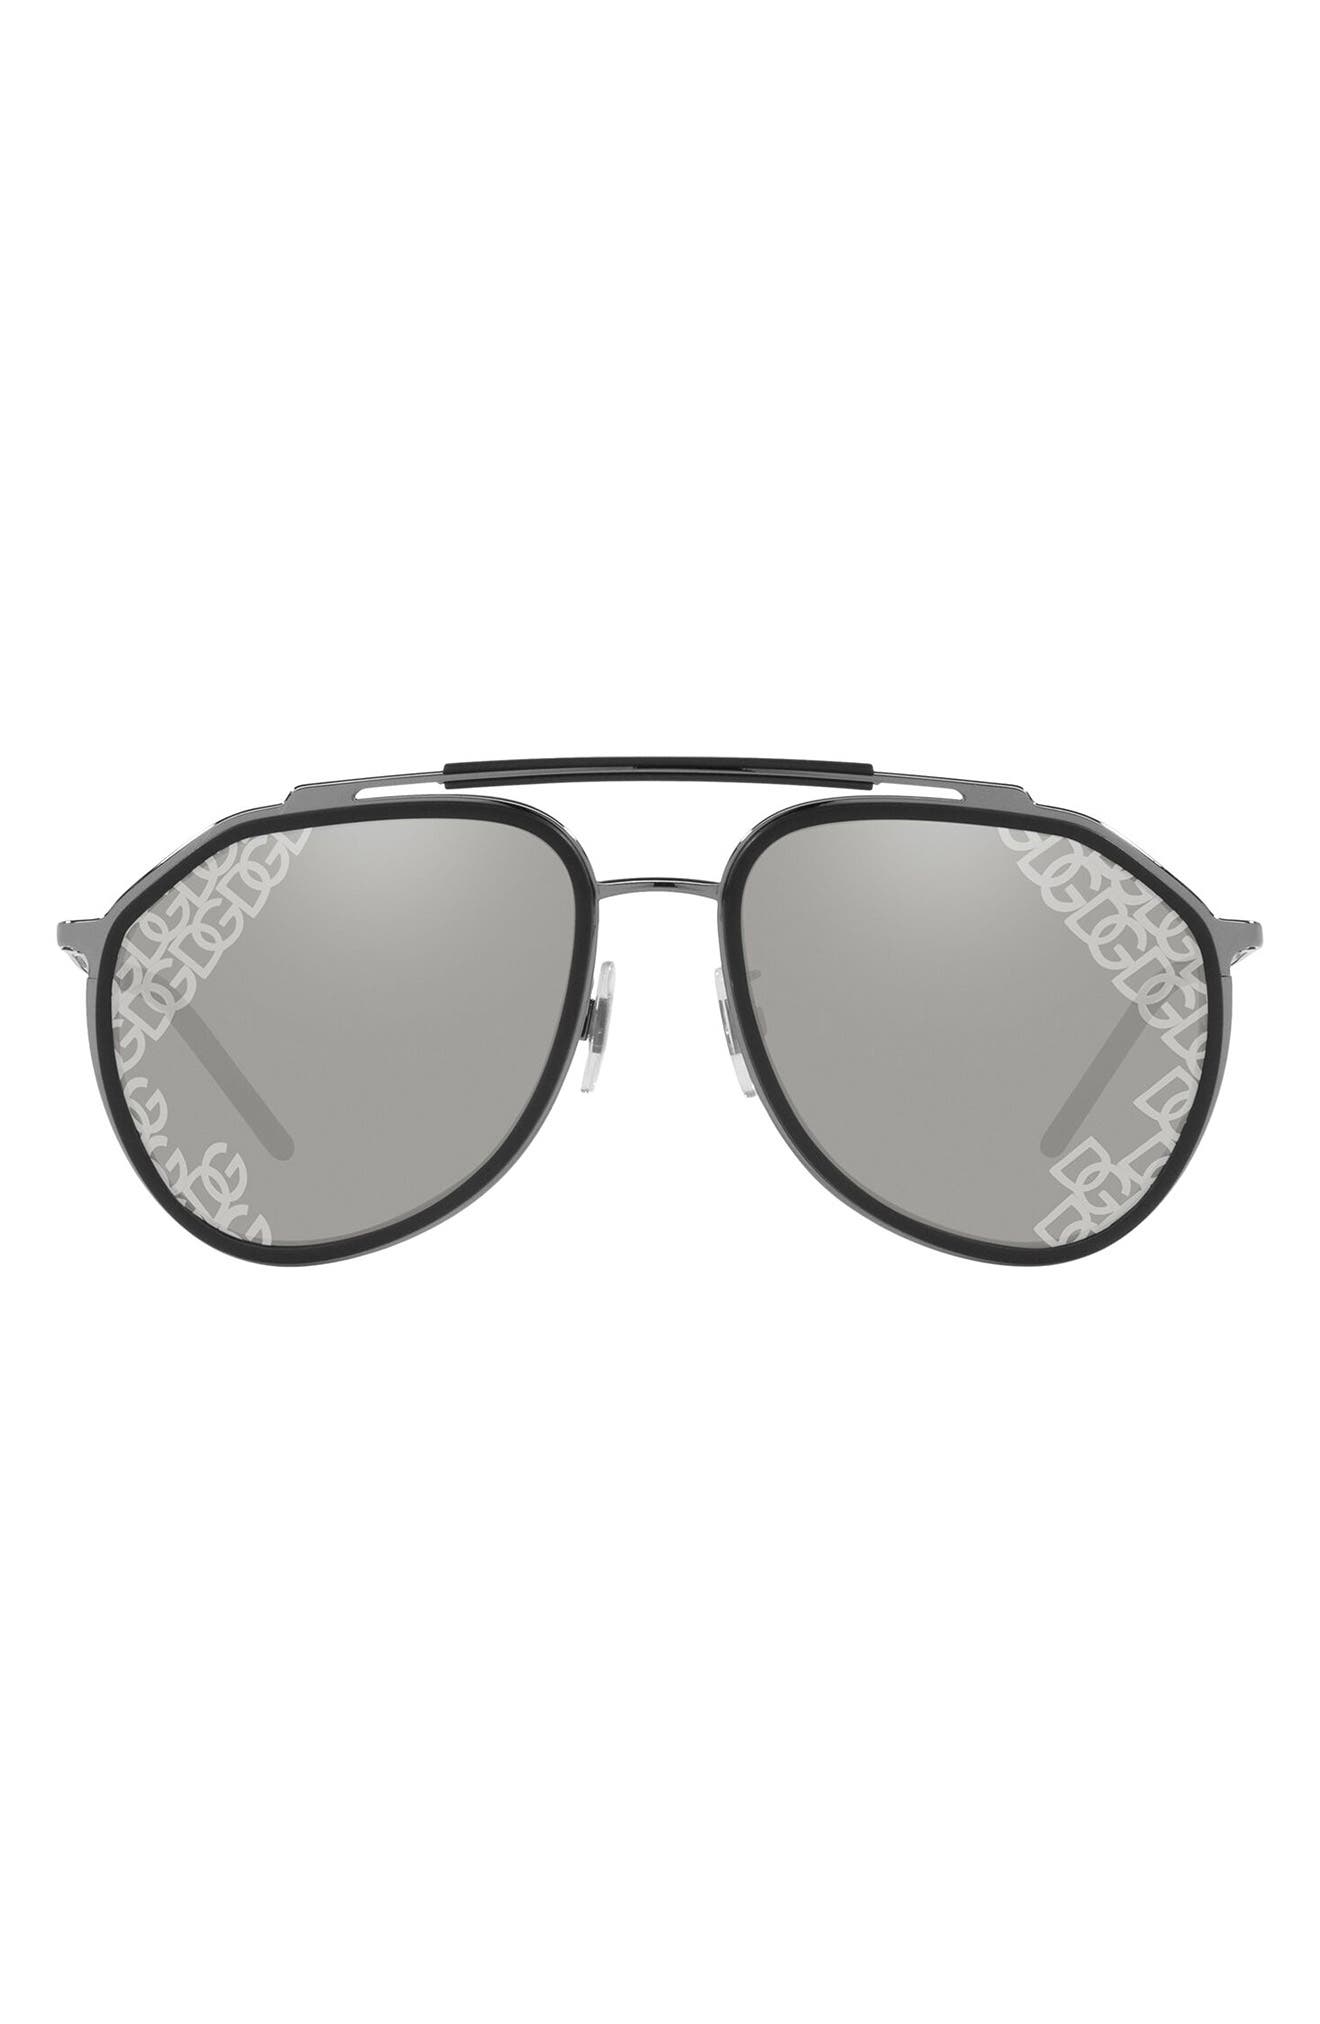 Dolce & Gabbana 57mm Aviator Sunglasses in Gunmetal/black/grey Silver at Nordstrom